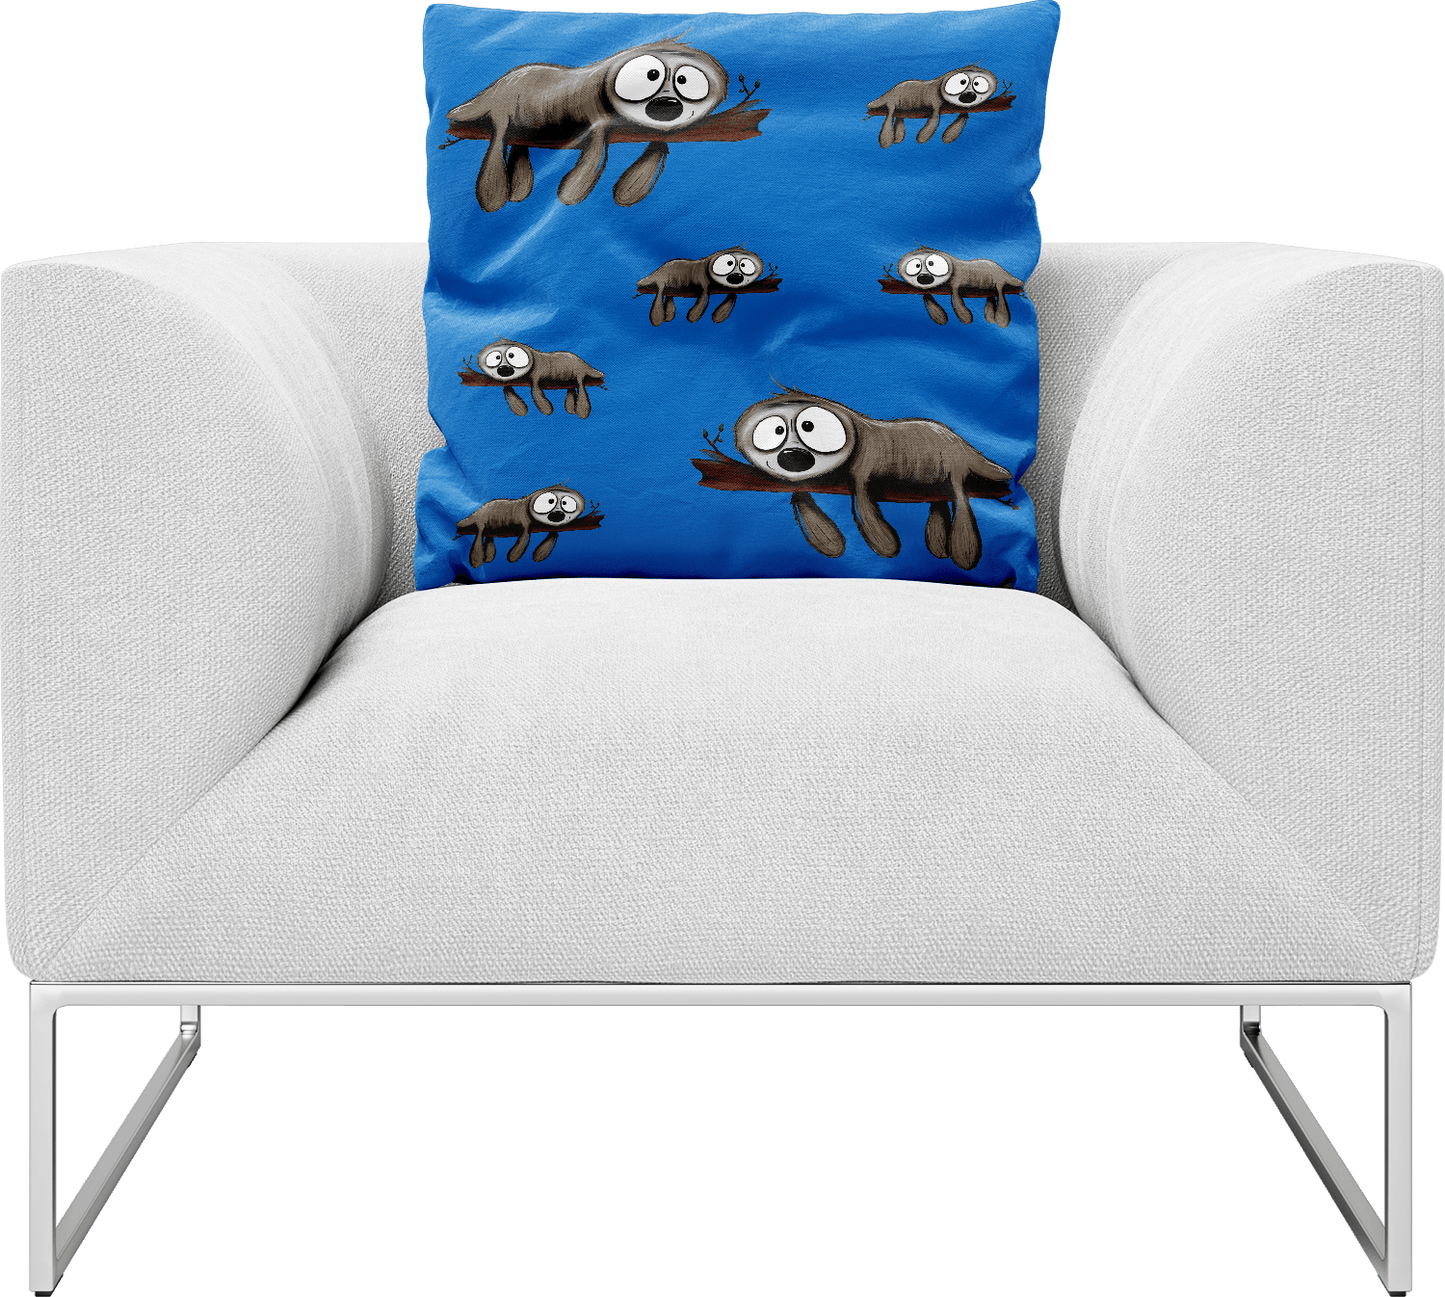 Snoozy Sloth Pillows Cushions - fungear.com.au